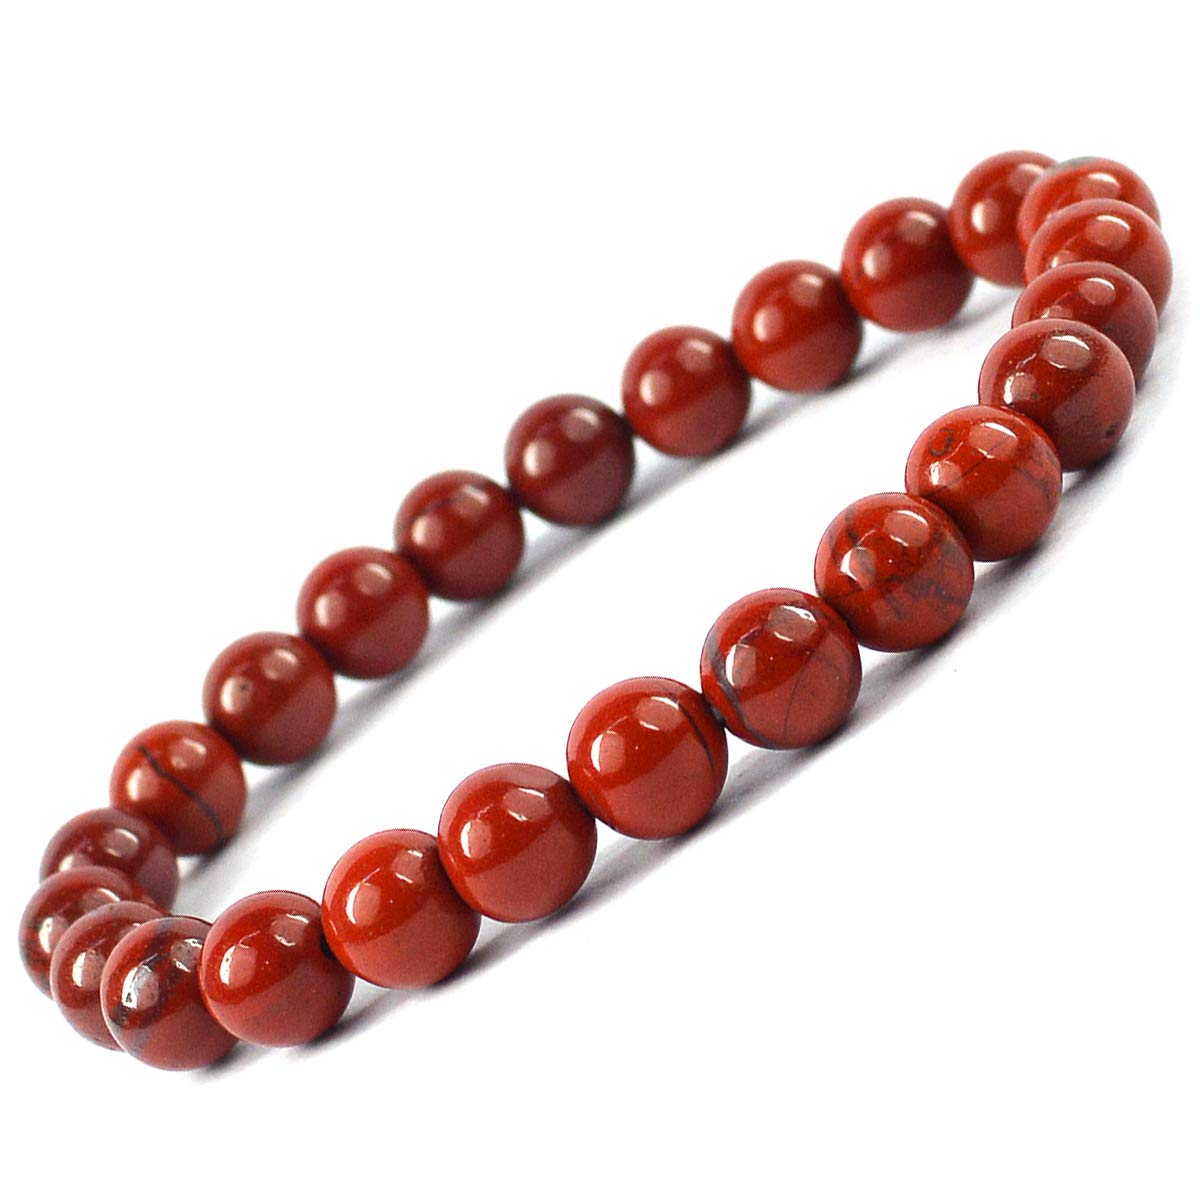 Red Jasper Natural Healing Crystal Bracelet - 8mm Round Beads - Beaded Bracelet